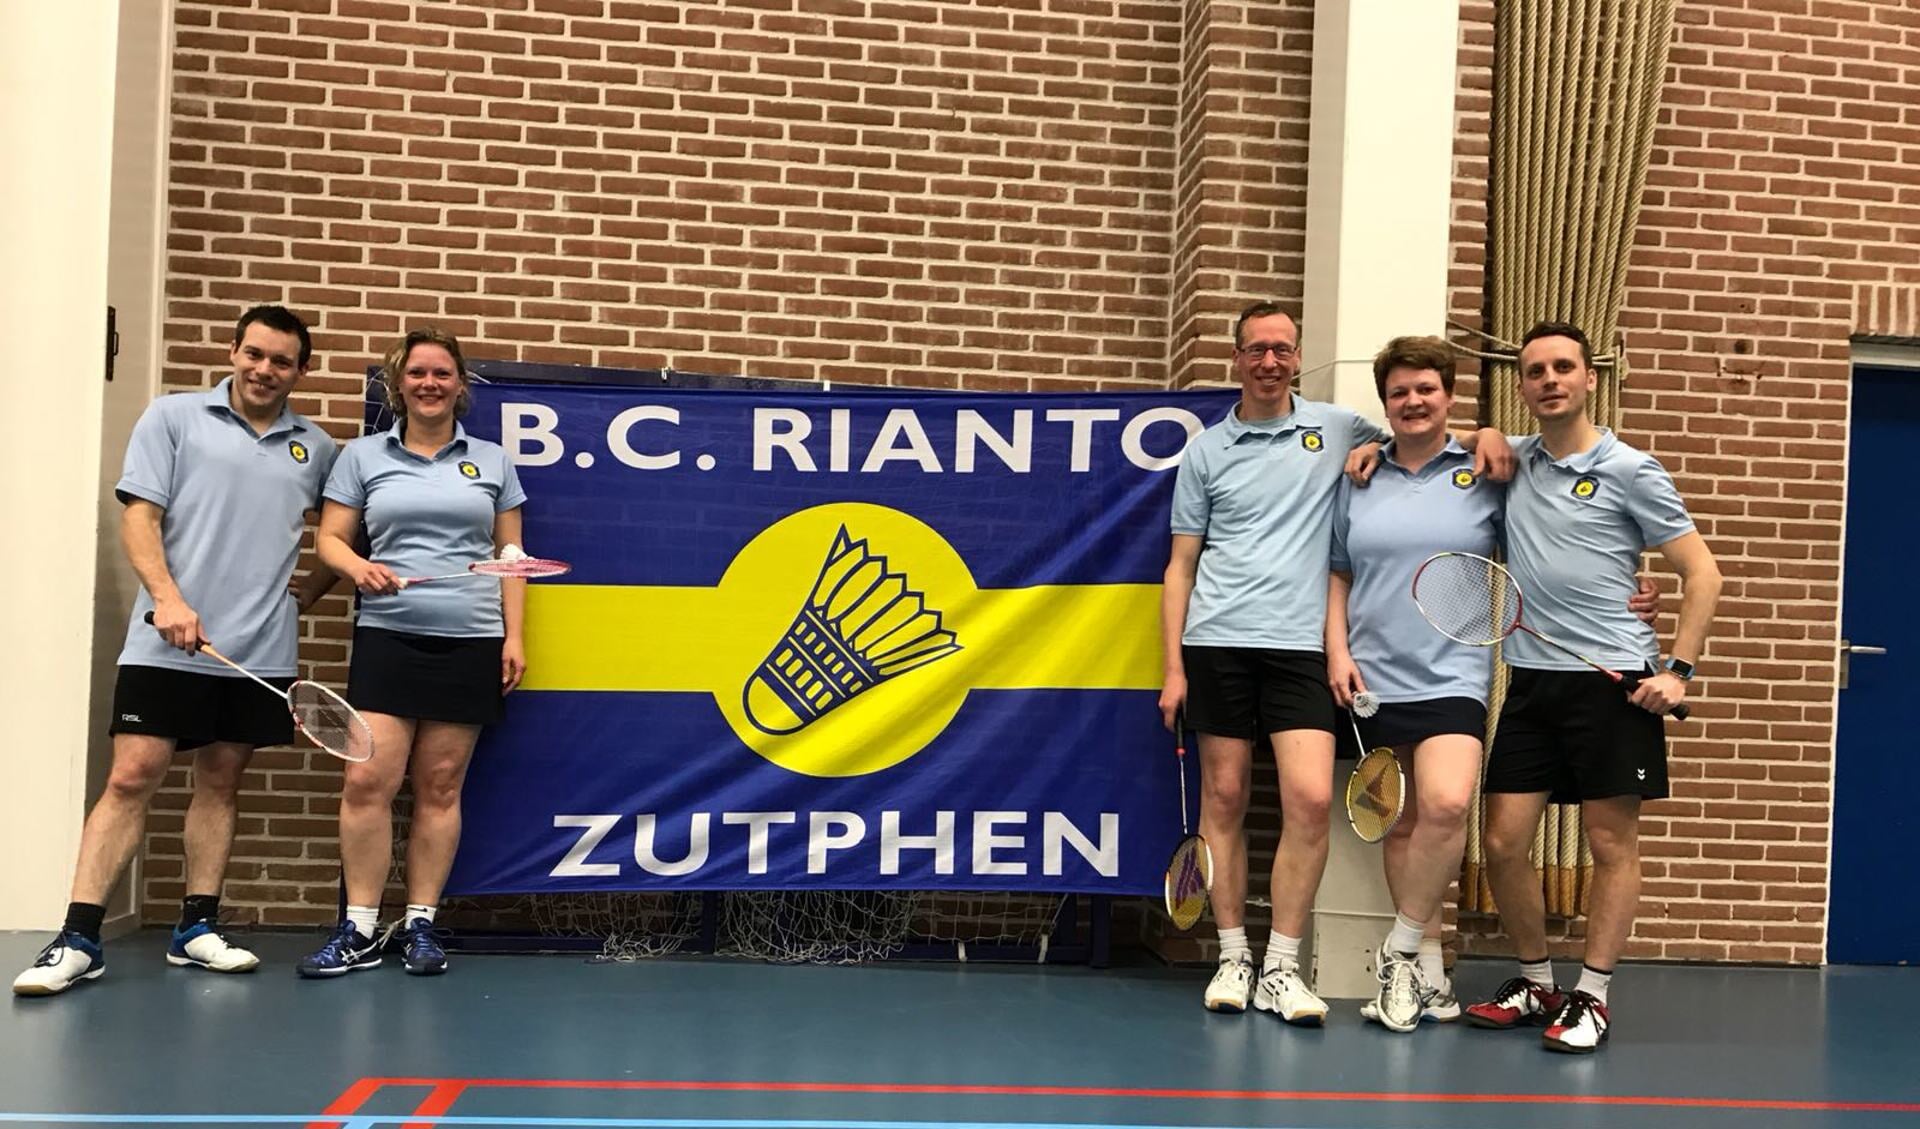 Spelers BC Rianto team 2, v.l.n.r.: Roger Jaspers, Laura Ootes, Peter Meint Heida, Alja Visschers en Thomas van Dongeren. Foto: PR